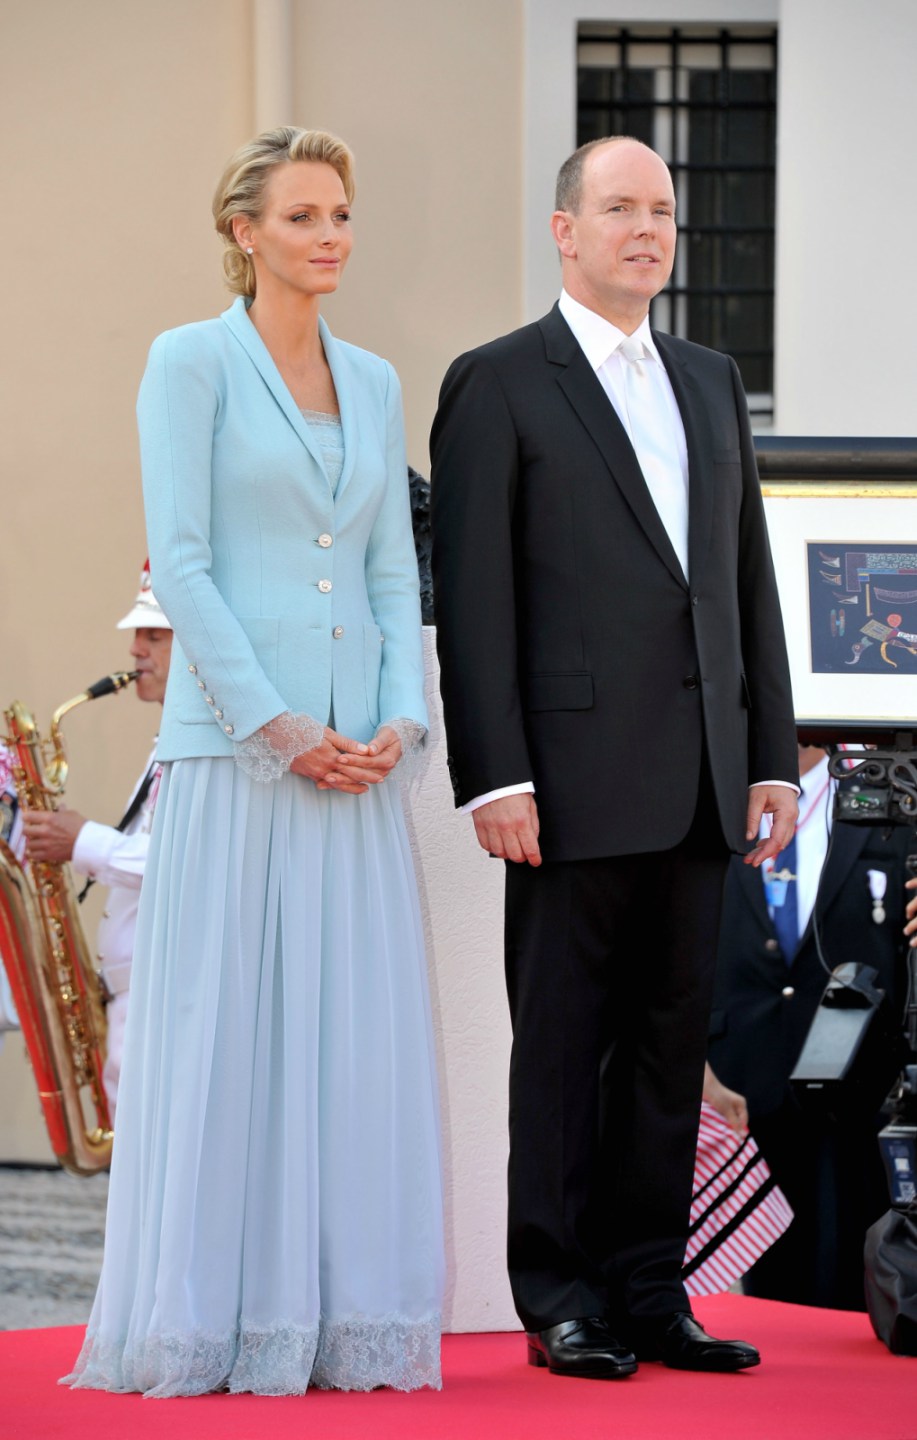 Prince Albert and Princess Charlene civil wedding